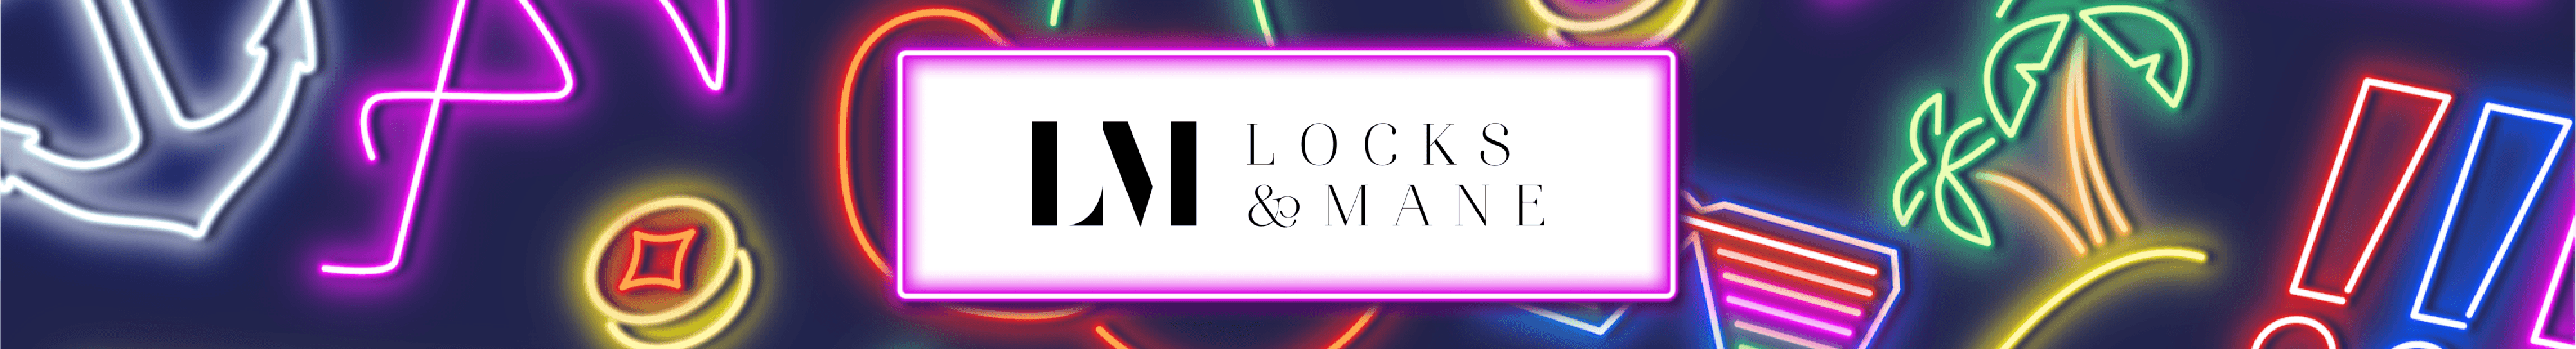 Locks & Maine Desktop.png